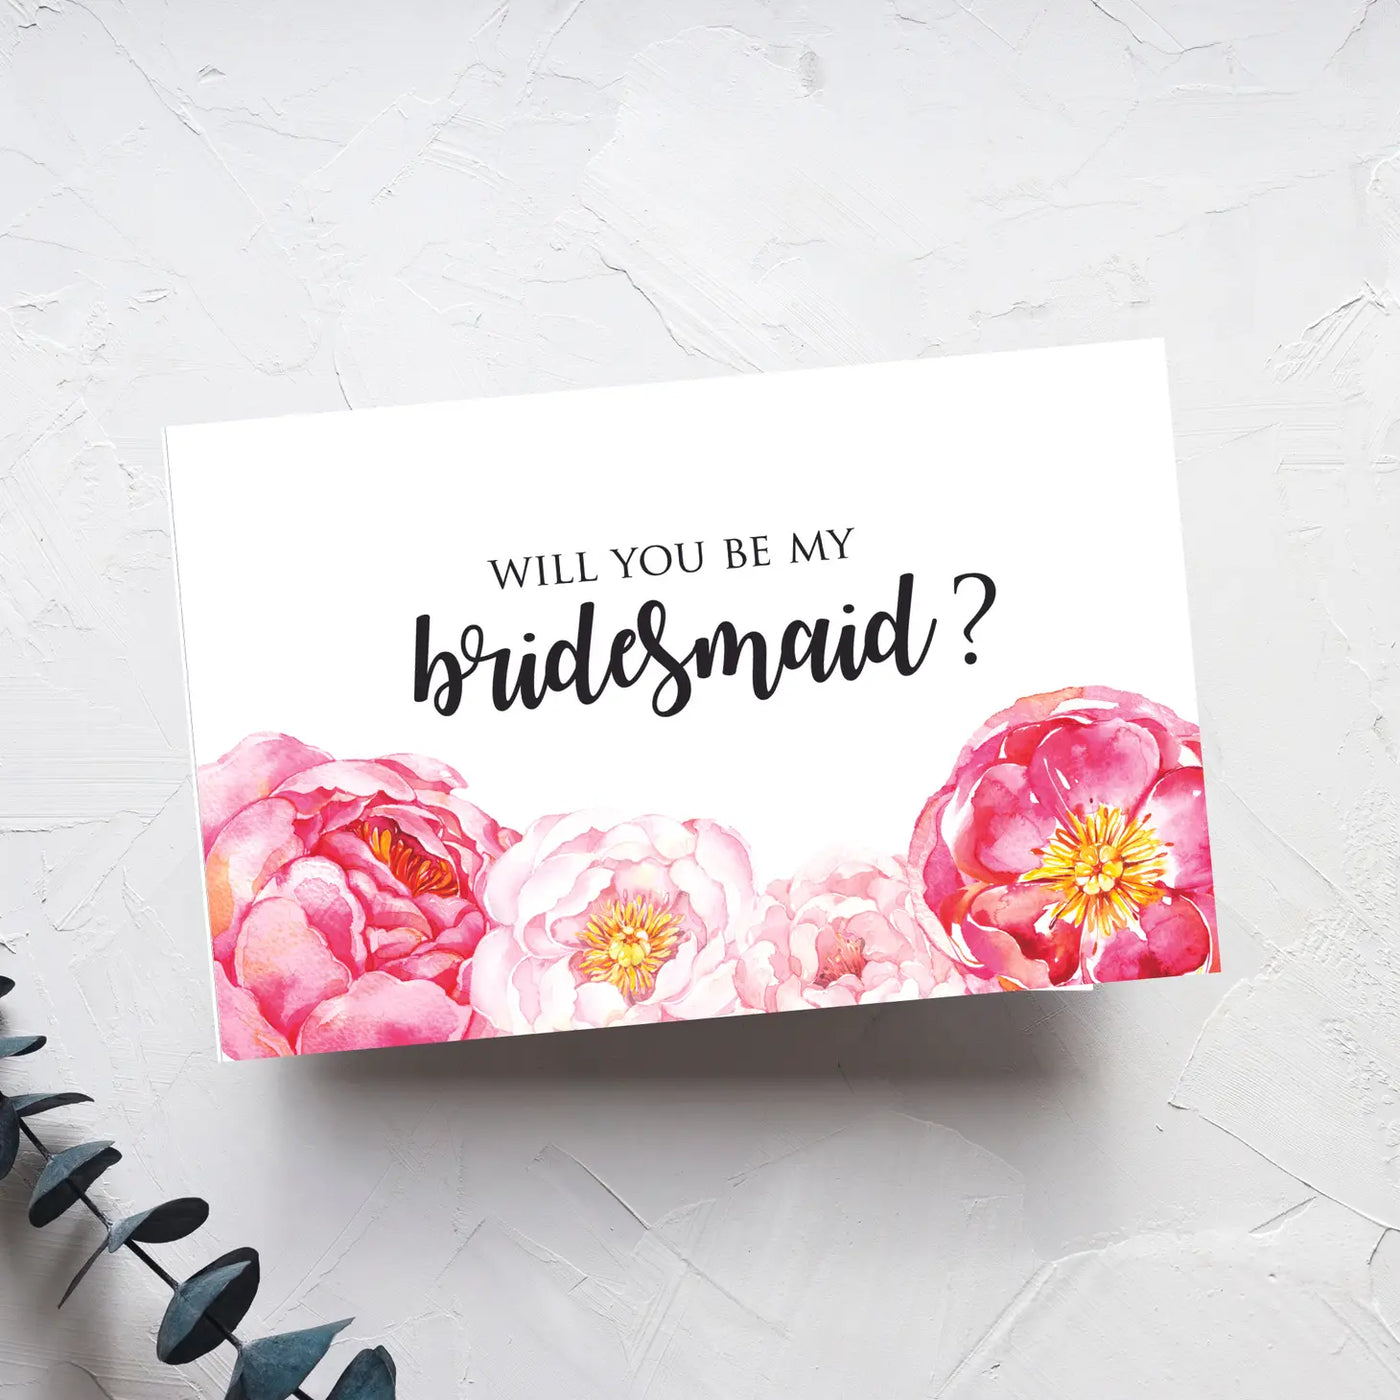 Bridesmaid Proposal Cards